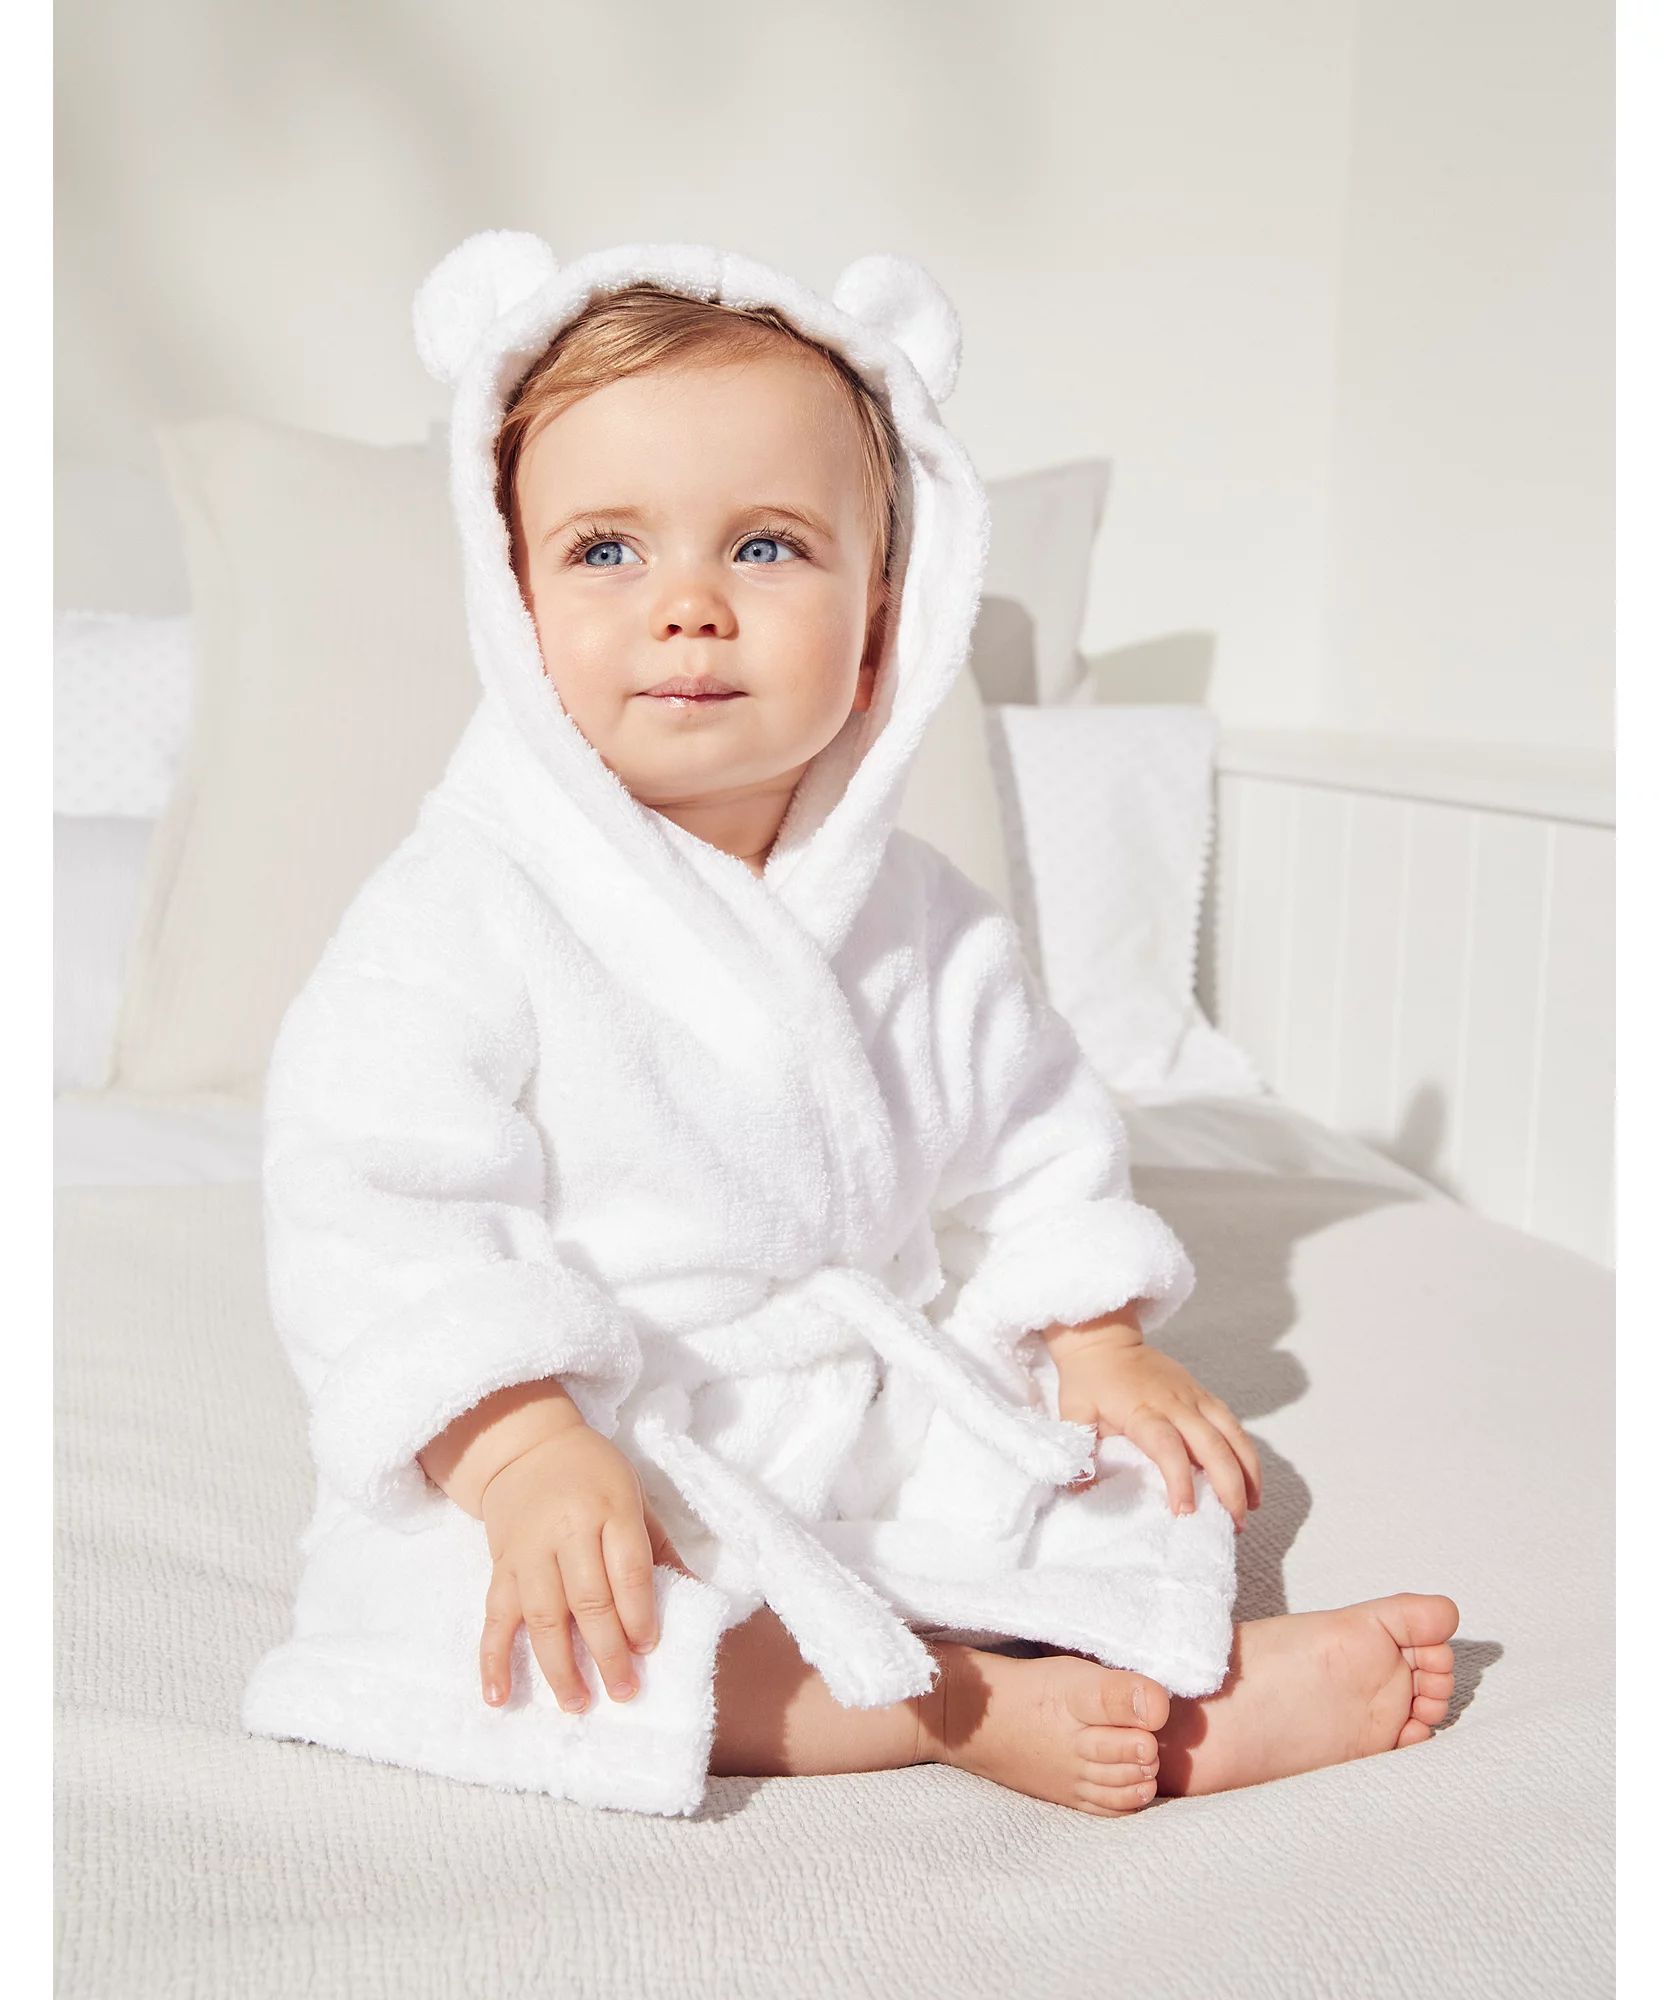 Hydrocotton Baby Robe
    
            
    
    
    
    
    
            
            29 revi... | The White Company (UK)